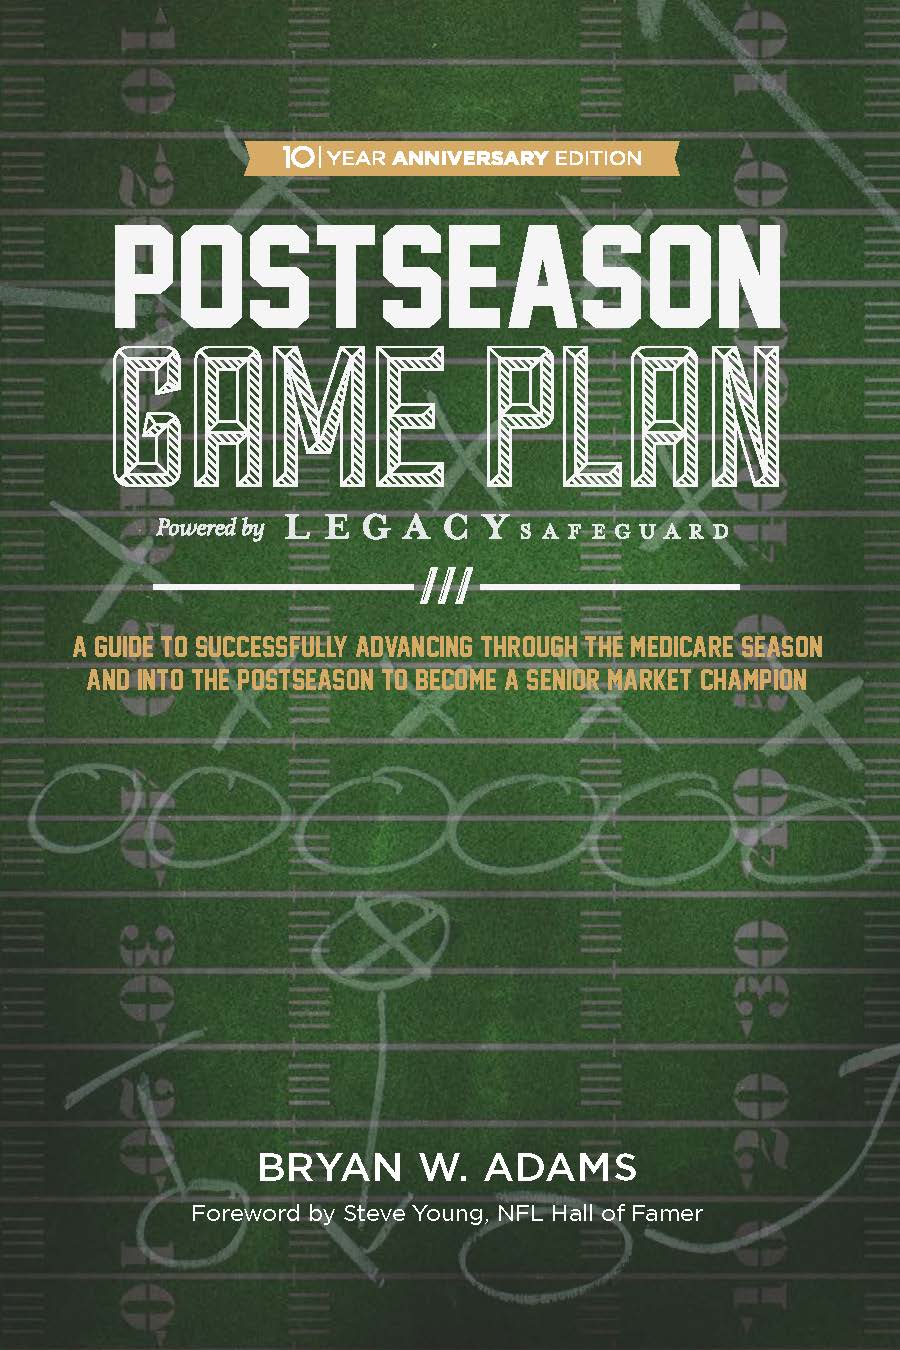 Postseason Game Plan eBook Cover